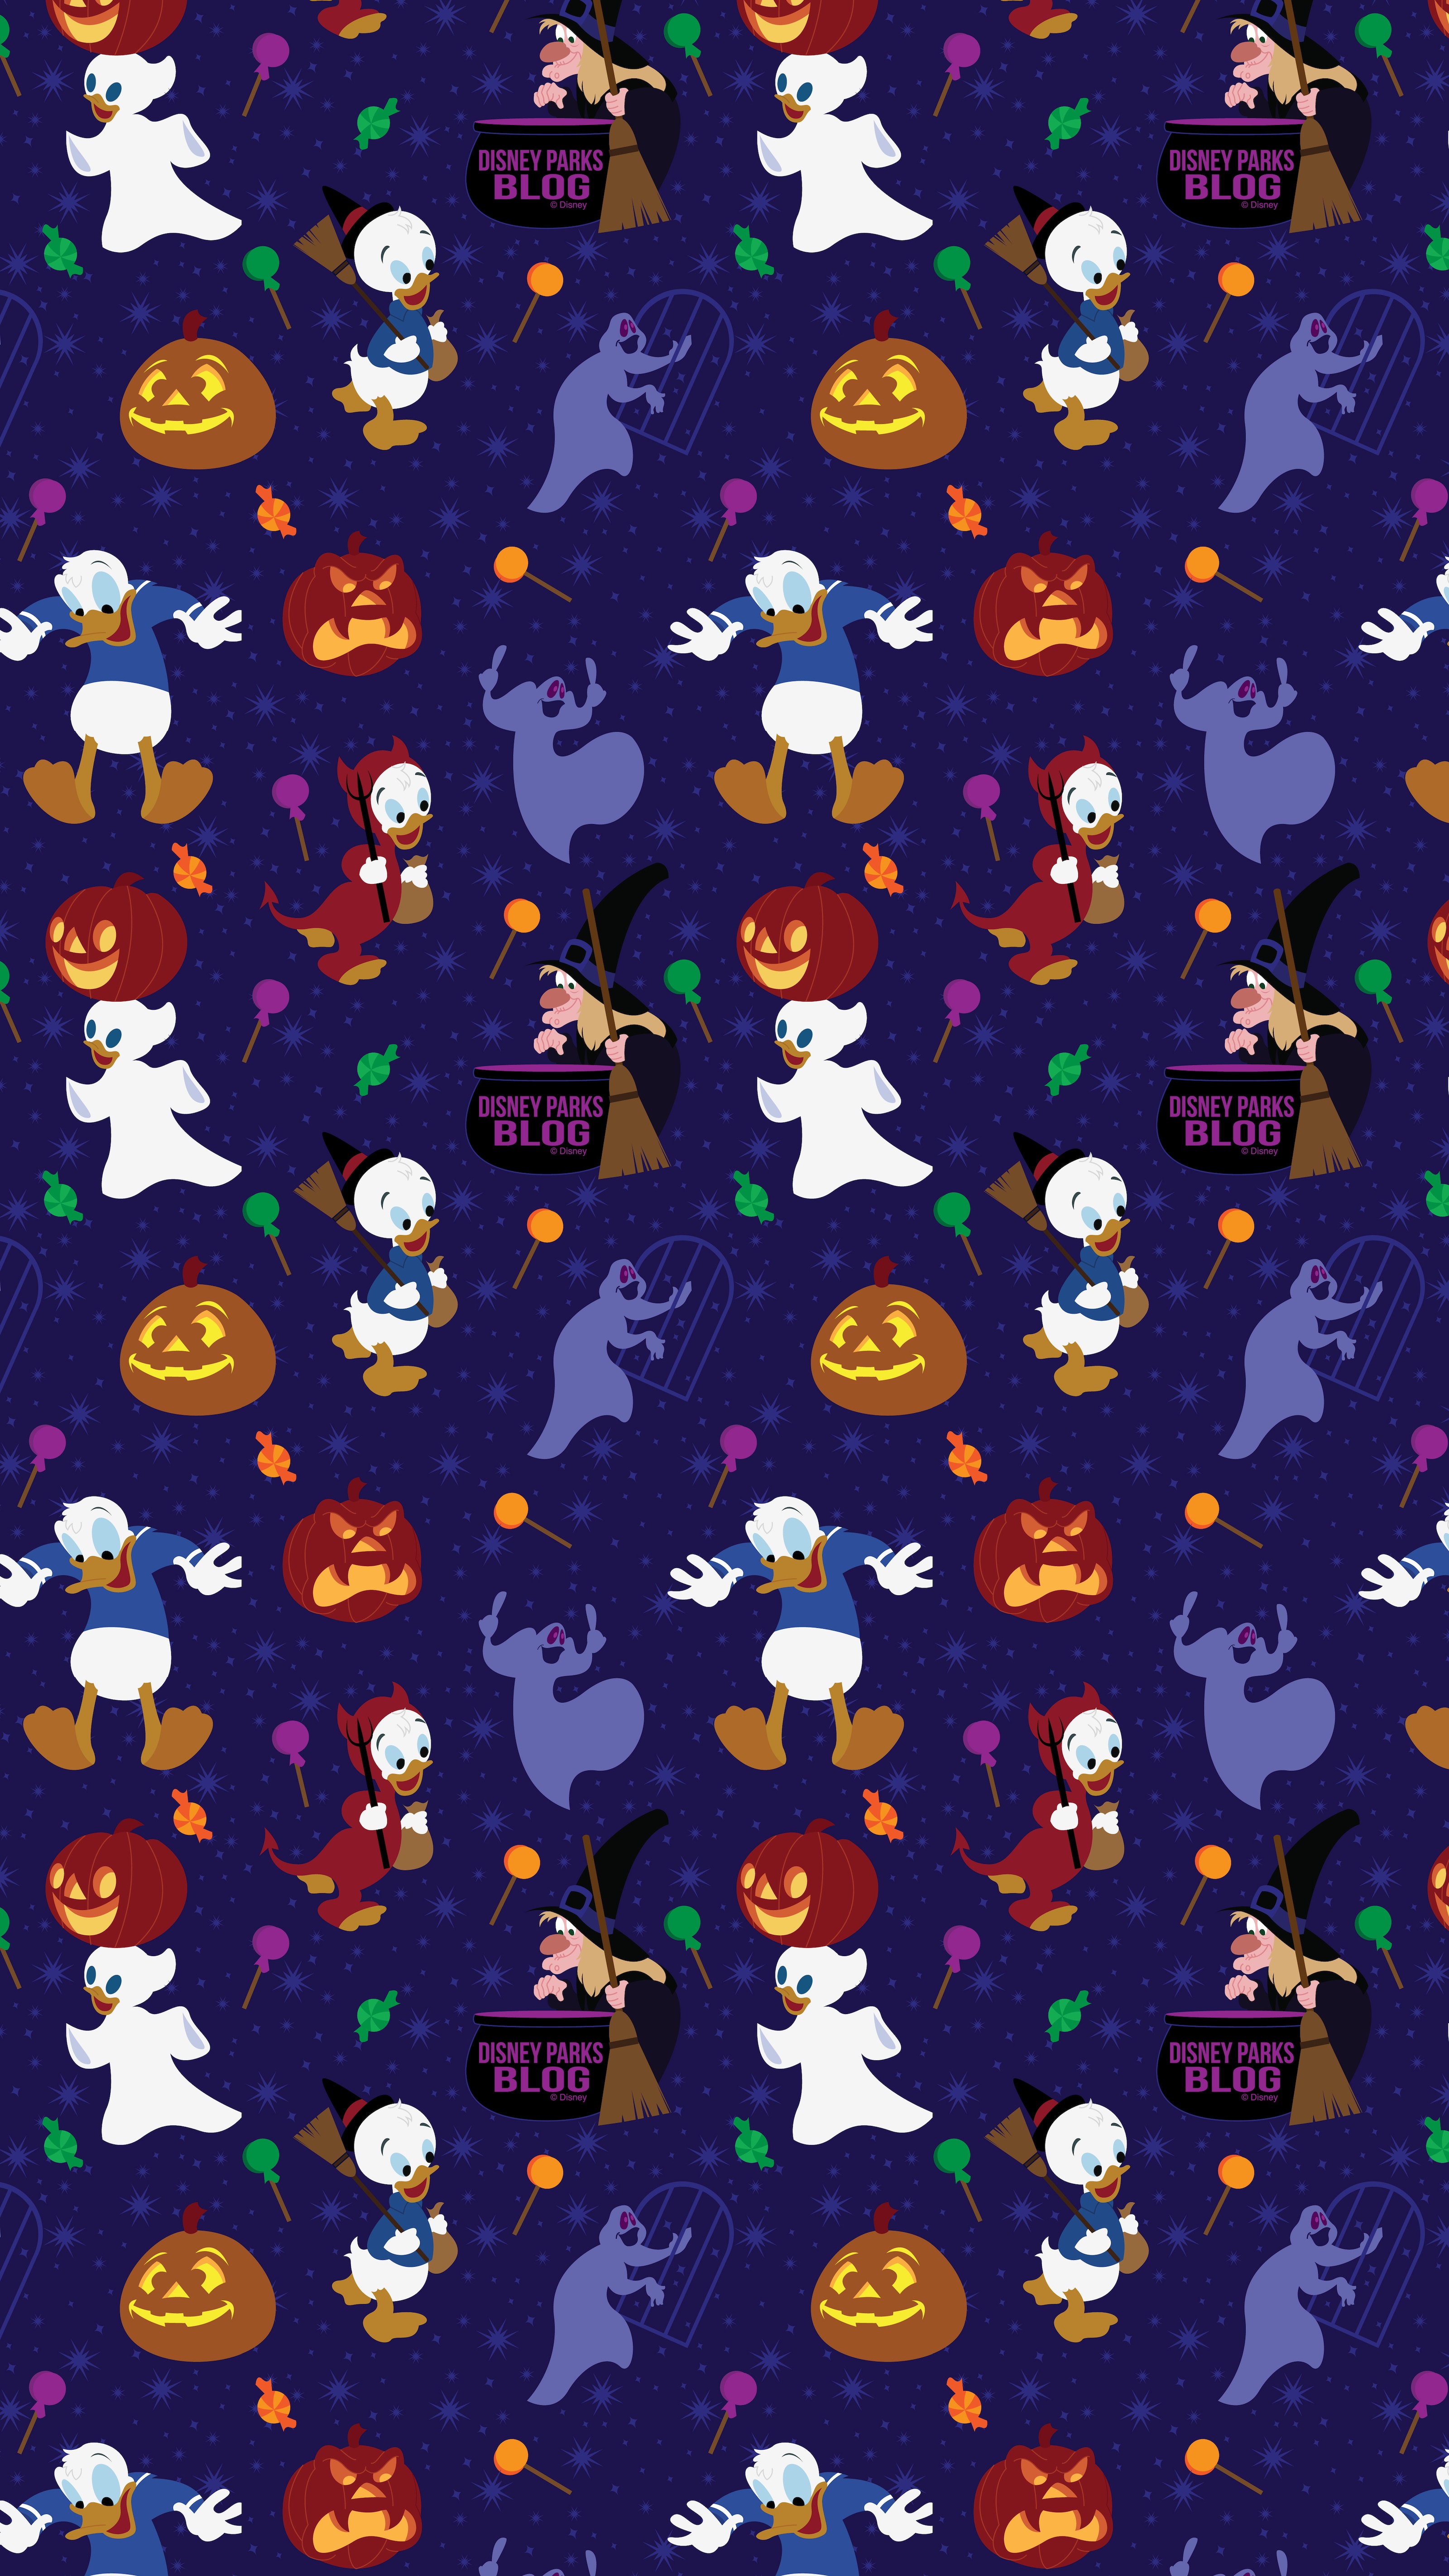 2019 Donald Duck Halloween Wallpaper – iPhone/Android | Disney Parks Blog